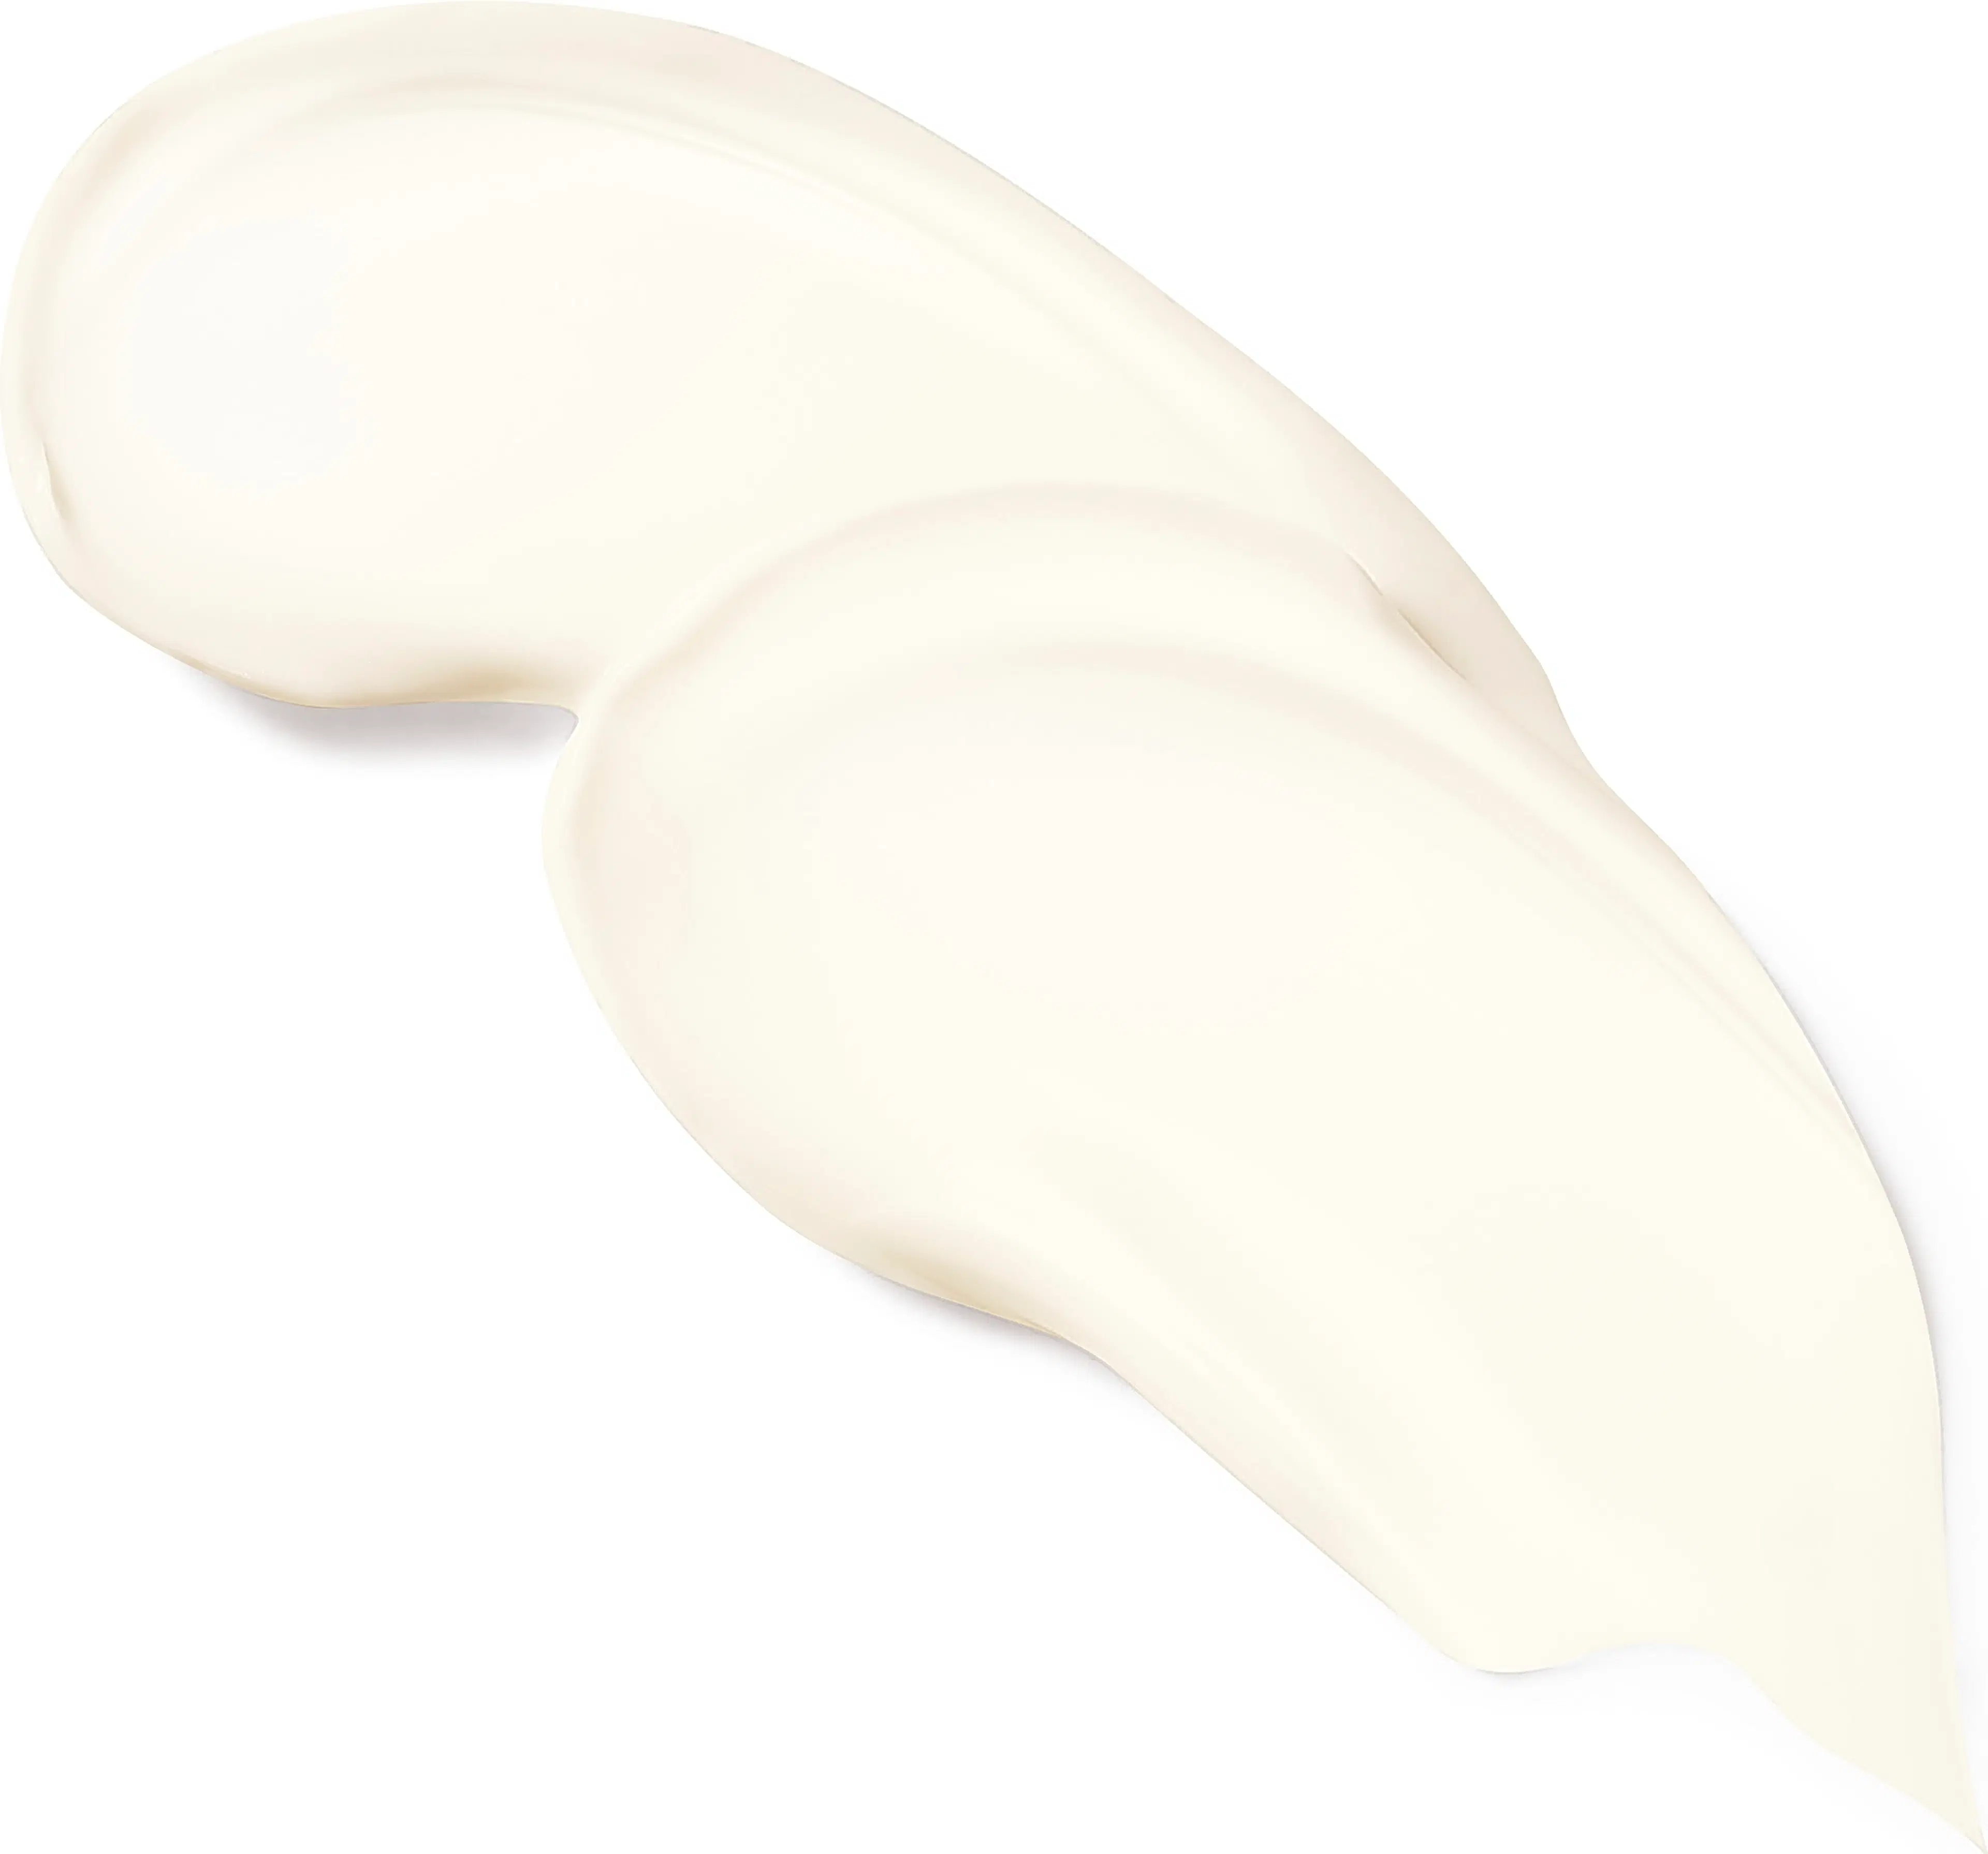 DIOR L'or de vie la Creme Refill silmänympärysvoide täyttöpakkaus 15 ml